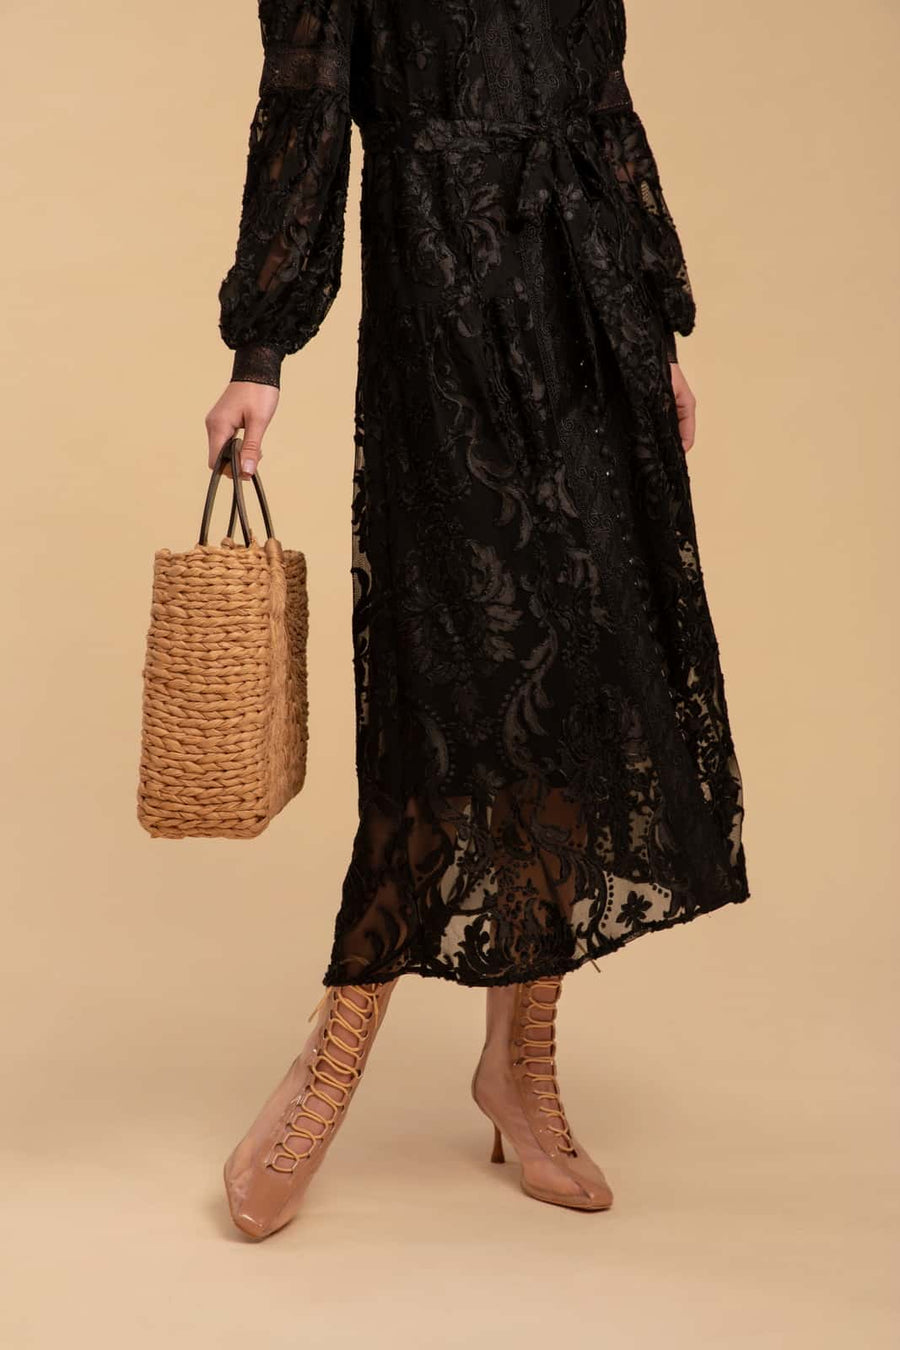 GDS Yvette Dress | Black DRESSES BLACK BRUNCH Catch DRESSES GDS L LACE M S SPRING-SUMMER WORK XS